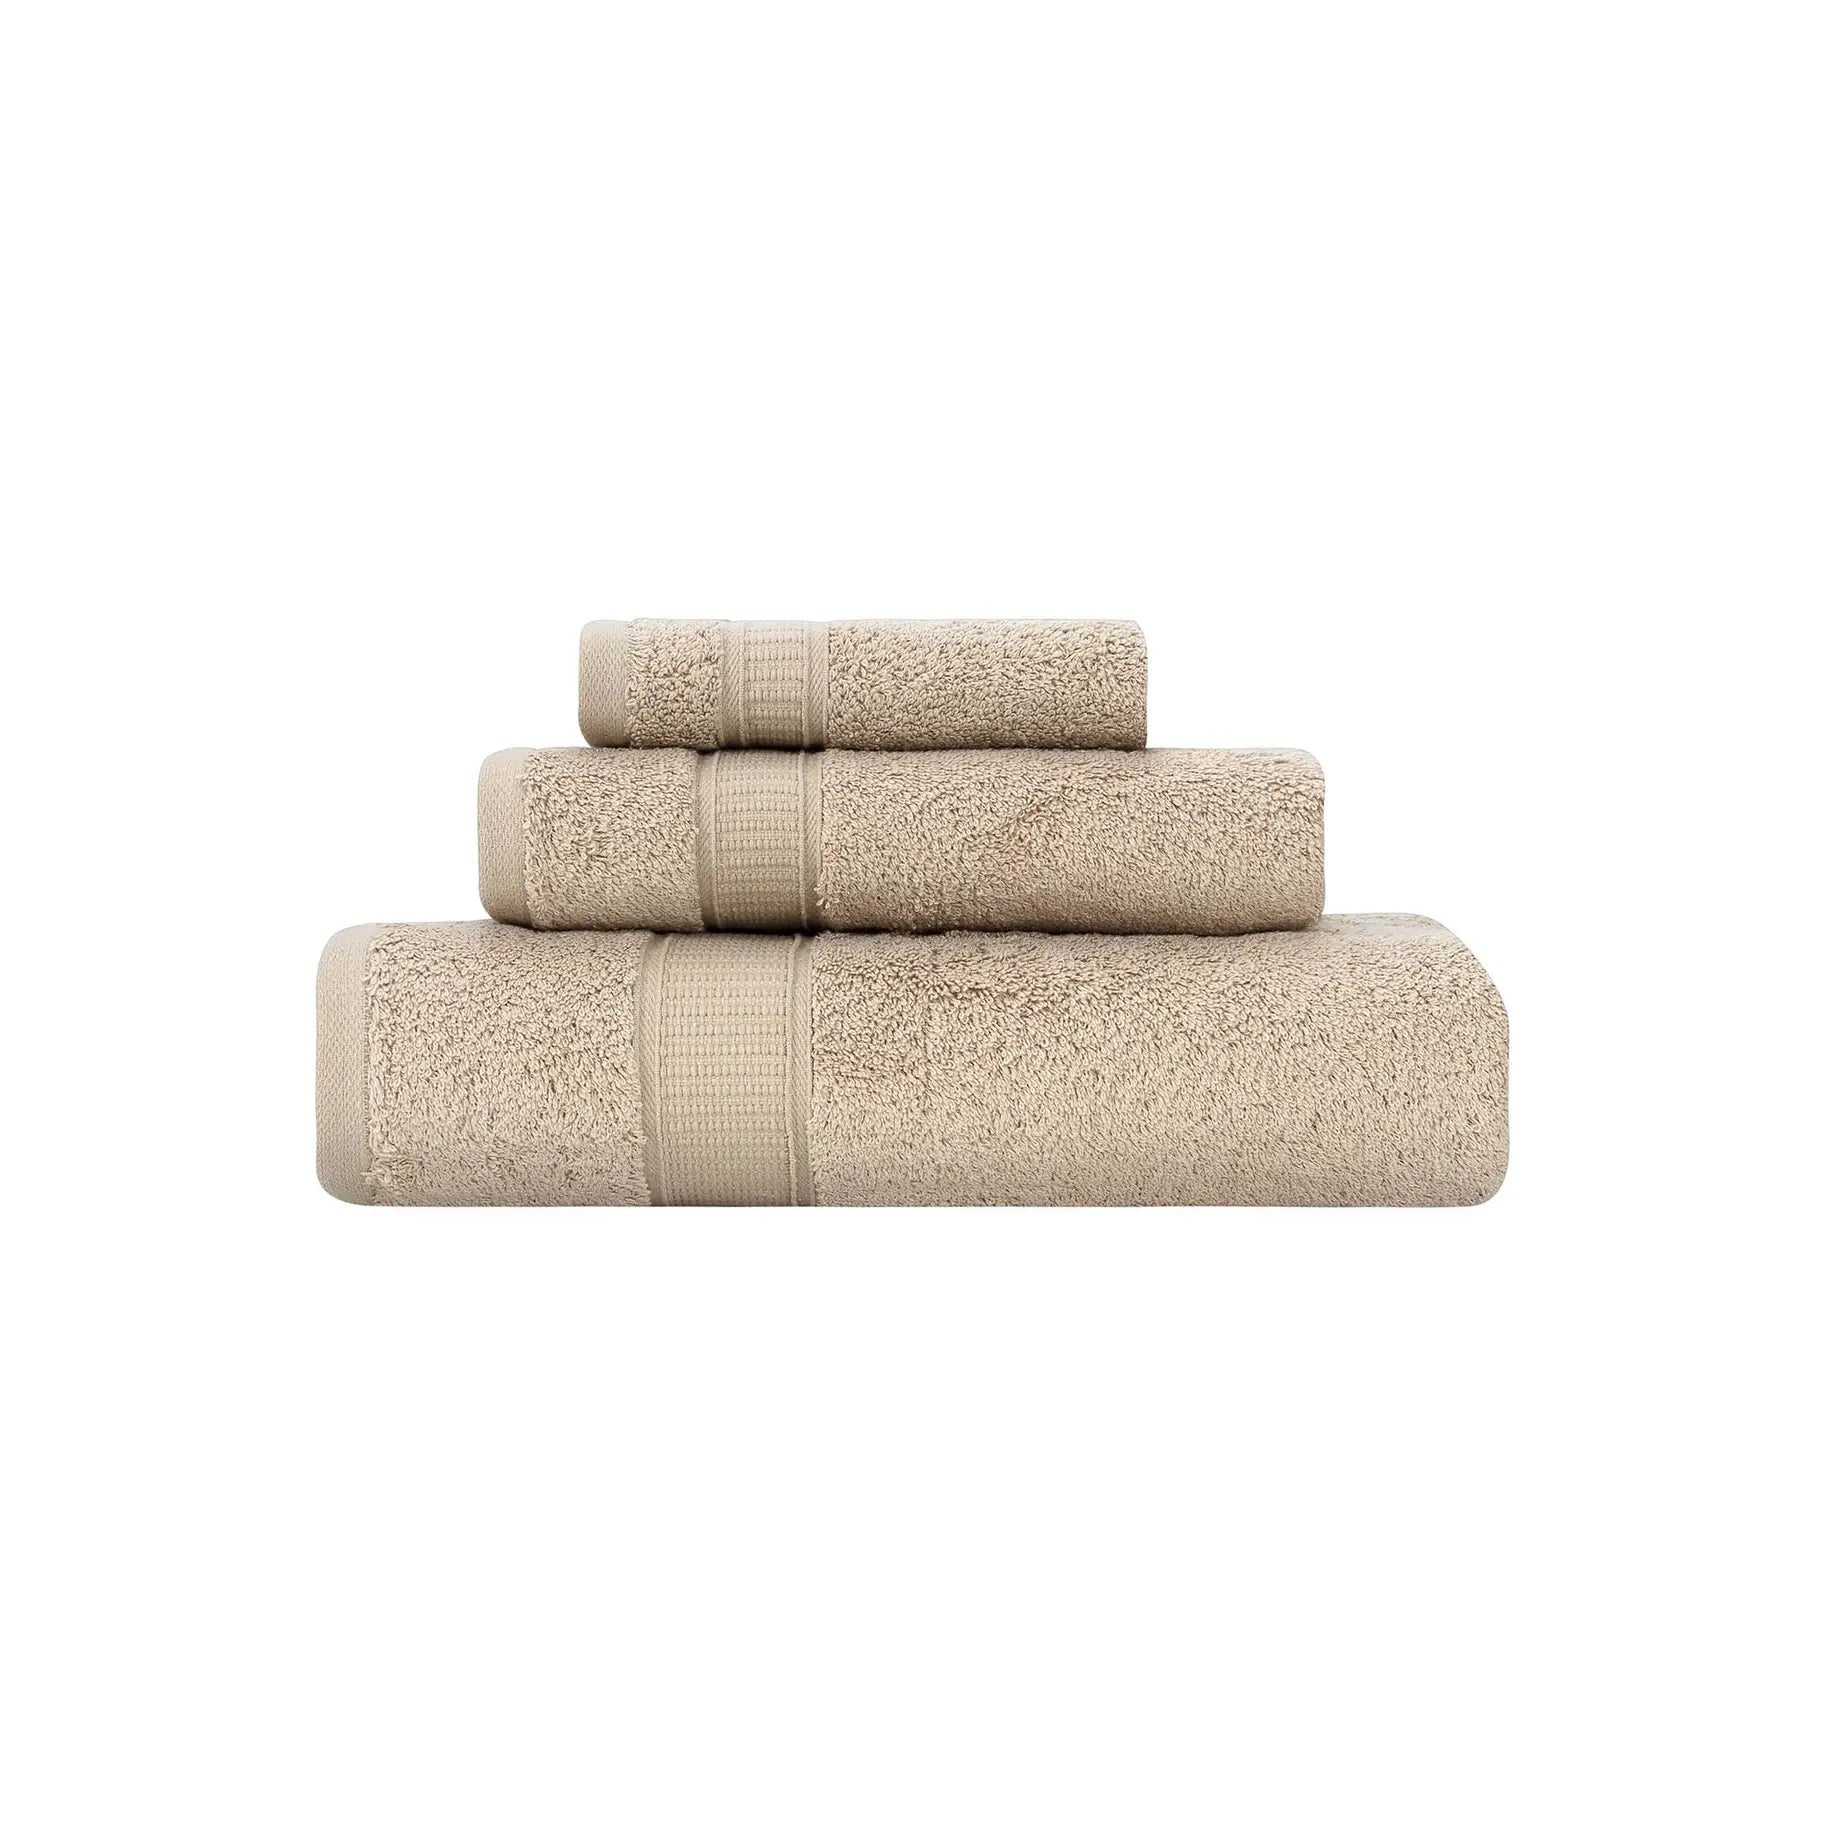 Luxury Turkish Cotton Bath Towels